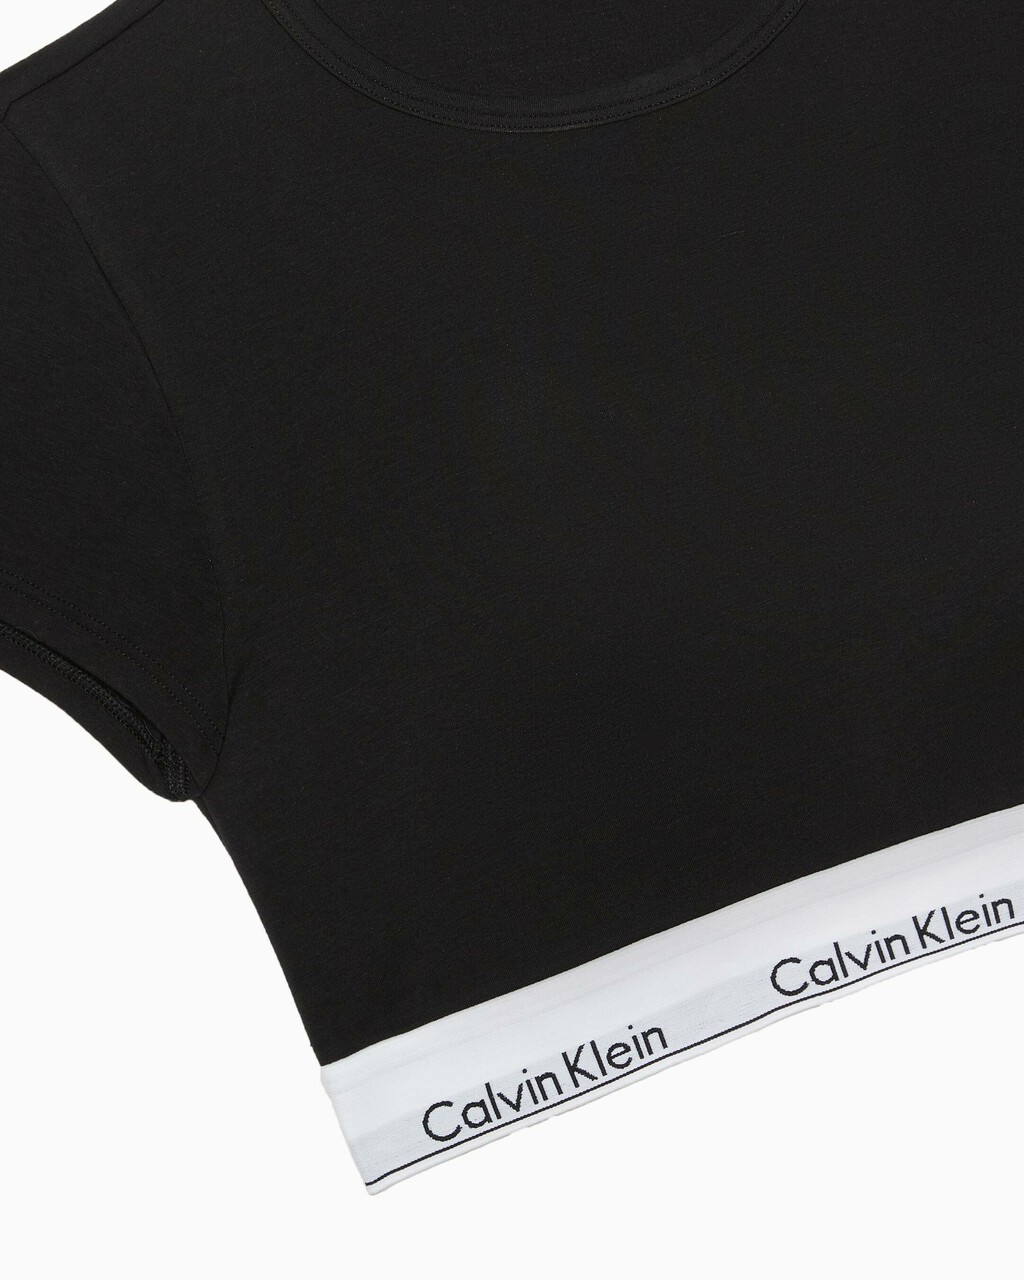 MODERN COTTON 無鋼圈 T 恤胸罩, Black, hi-res